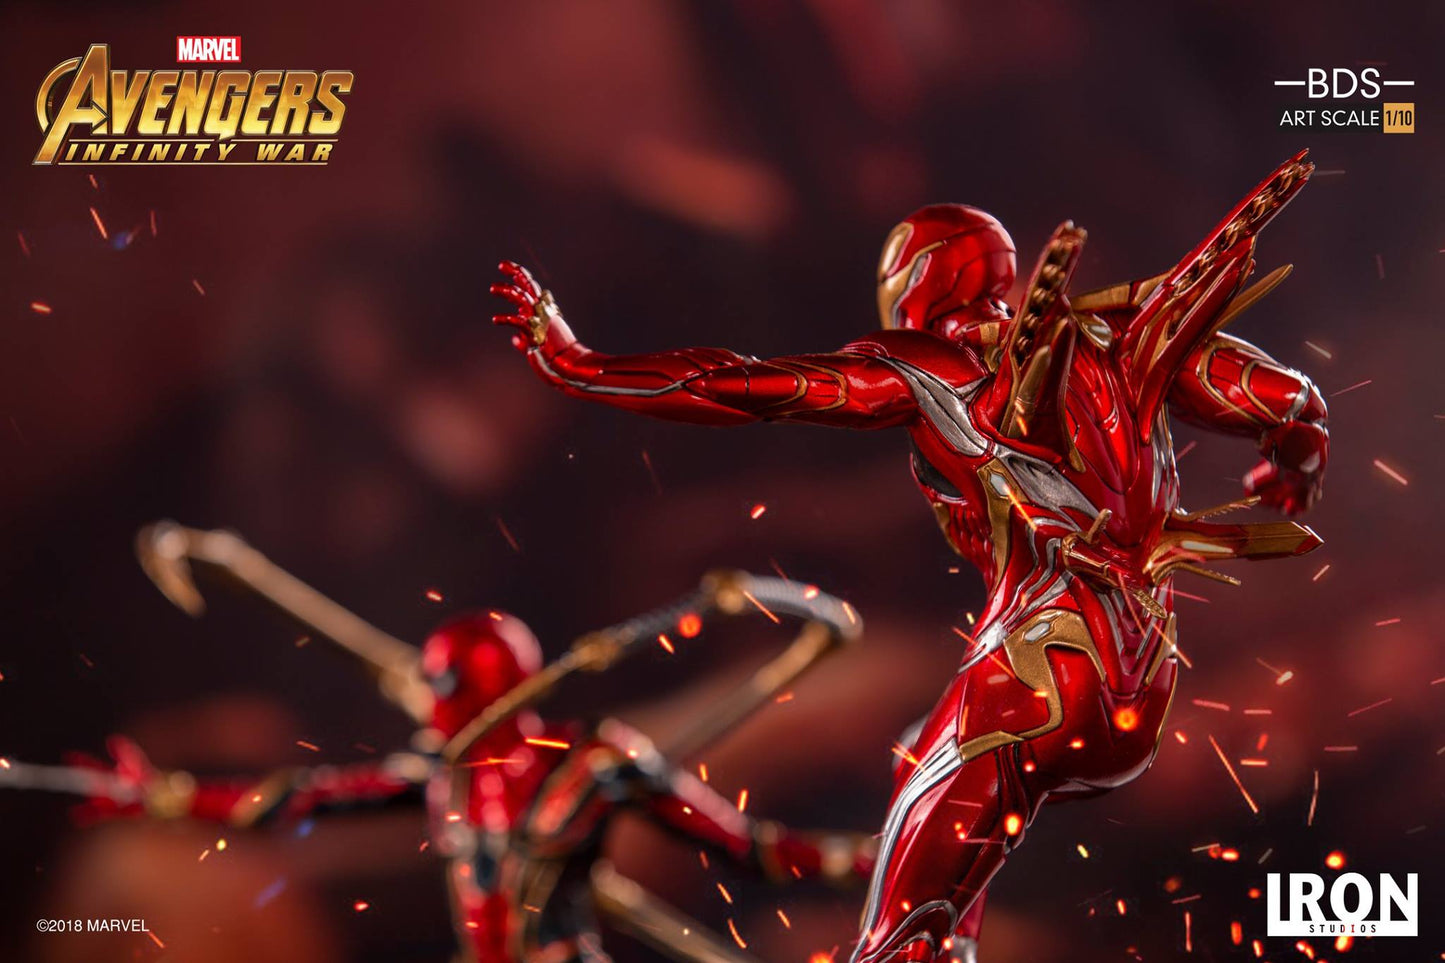 Iron Studios Art Scale 1/10 Marvel Avengers Infinity War Iron Man Mark 50